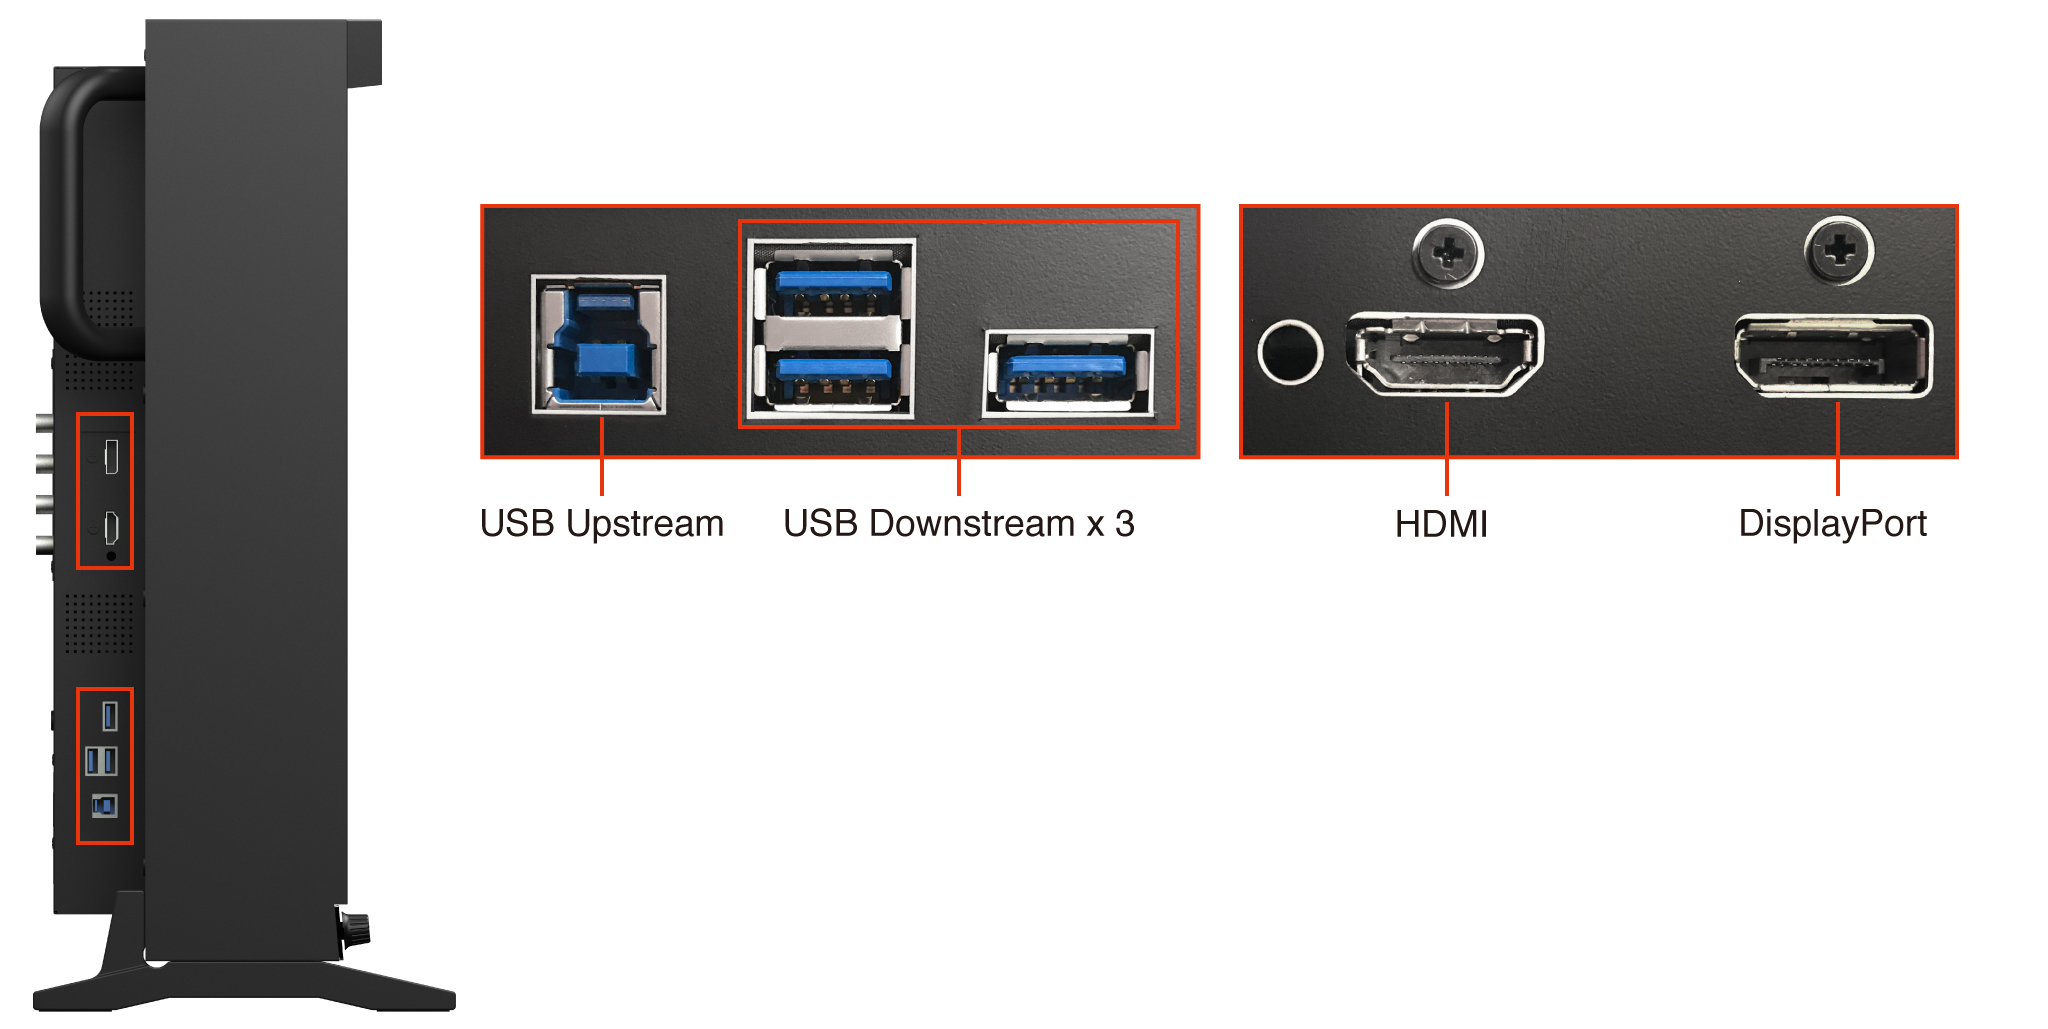 HDMI and DisplayPort Inputs